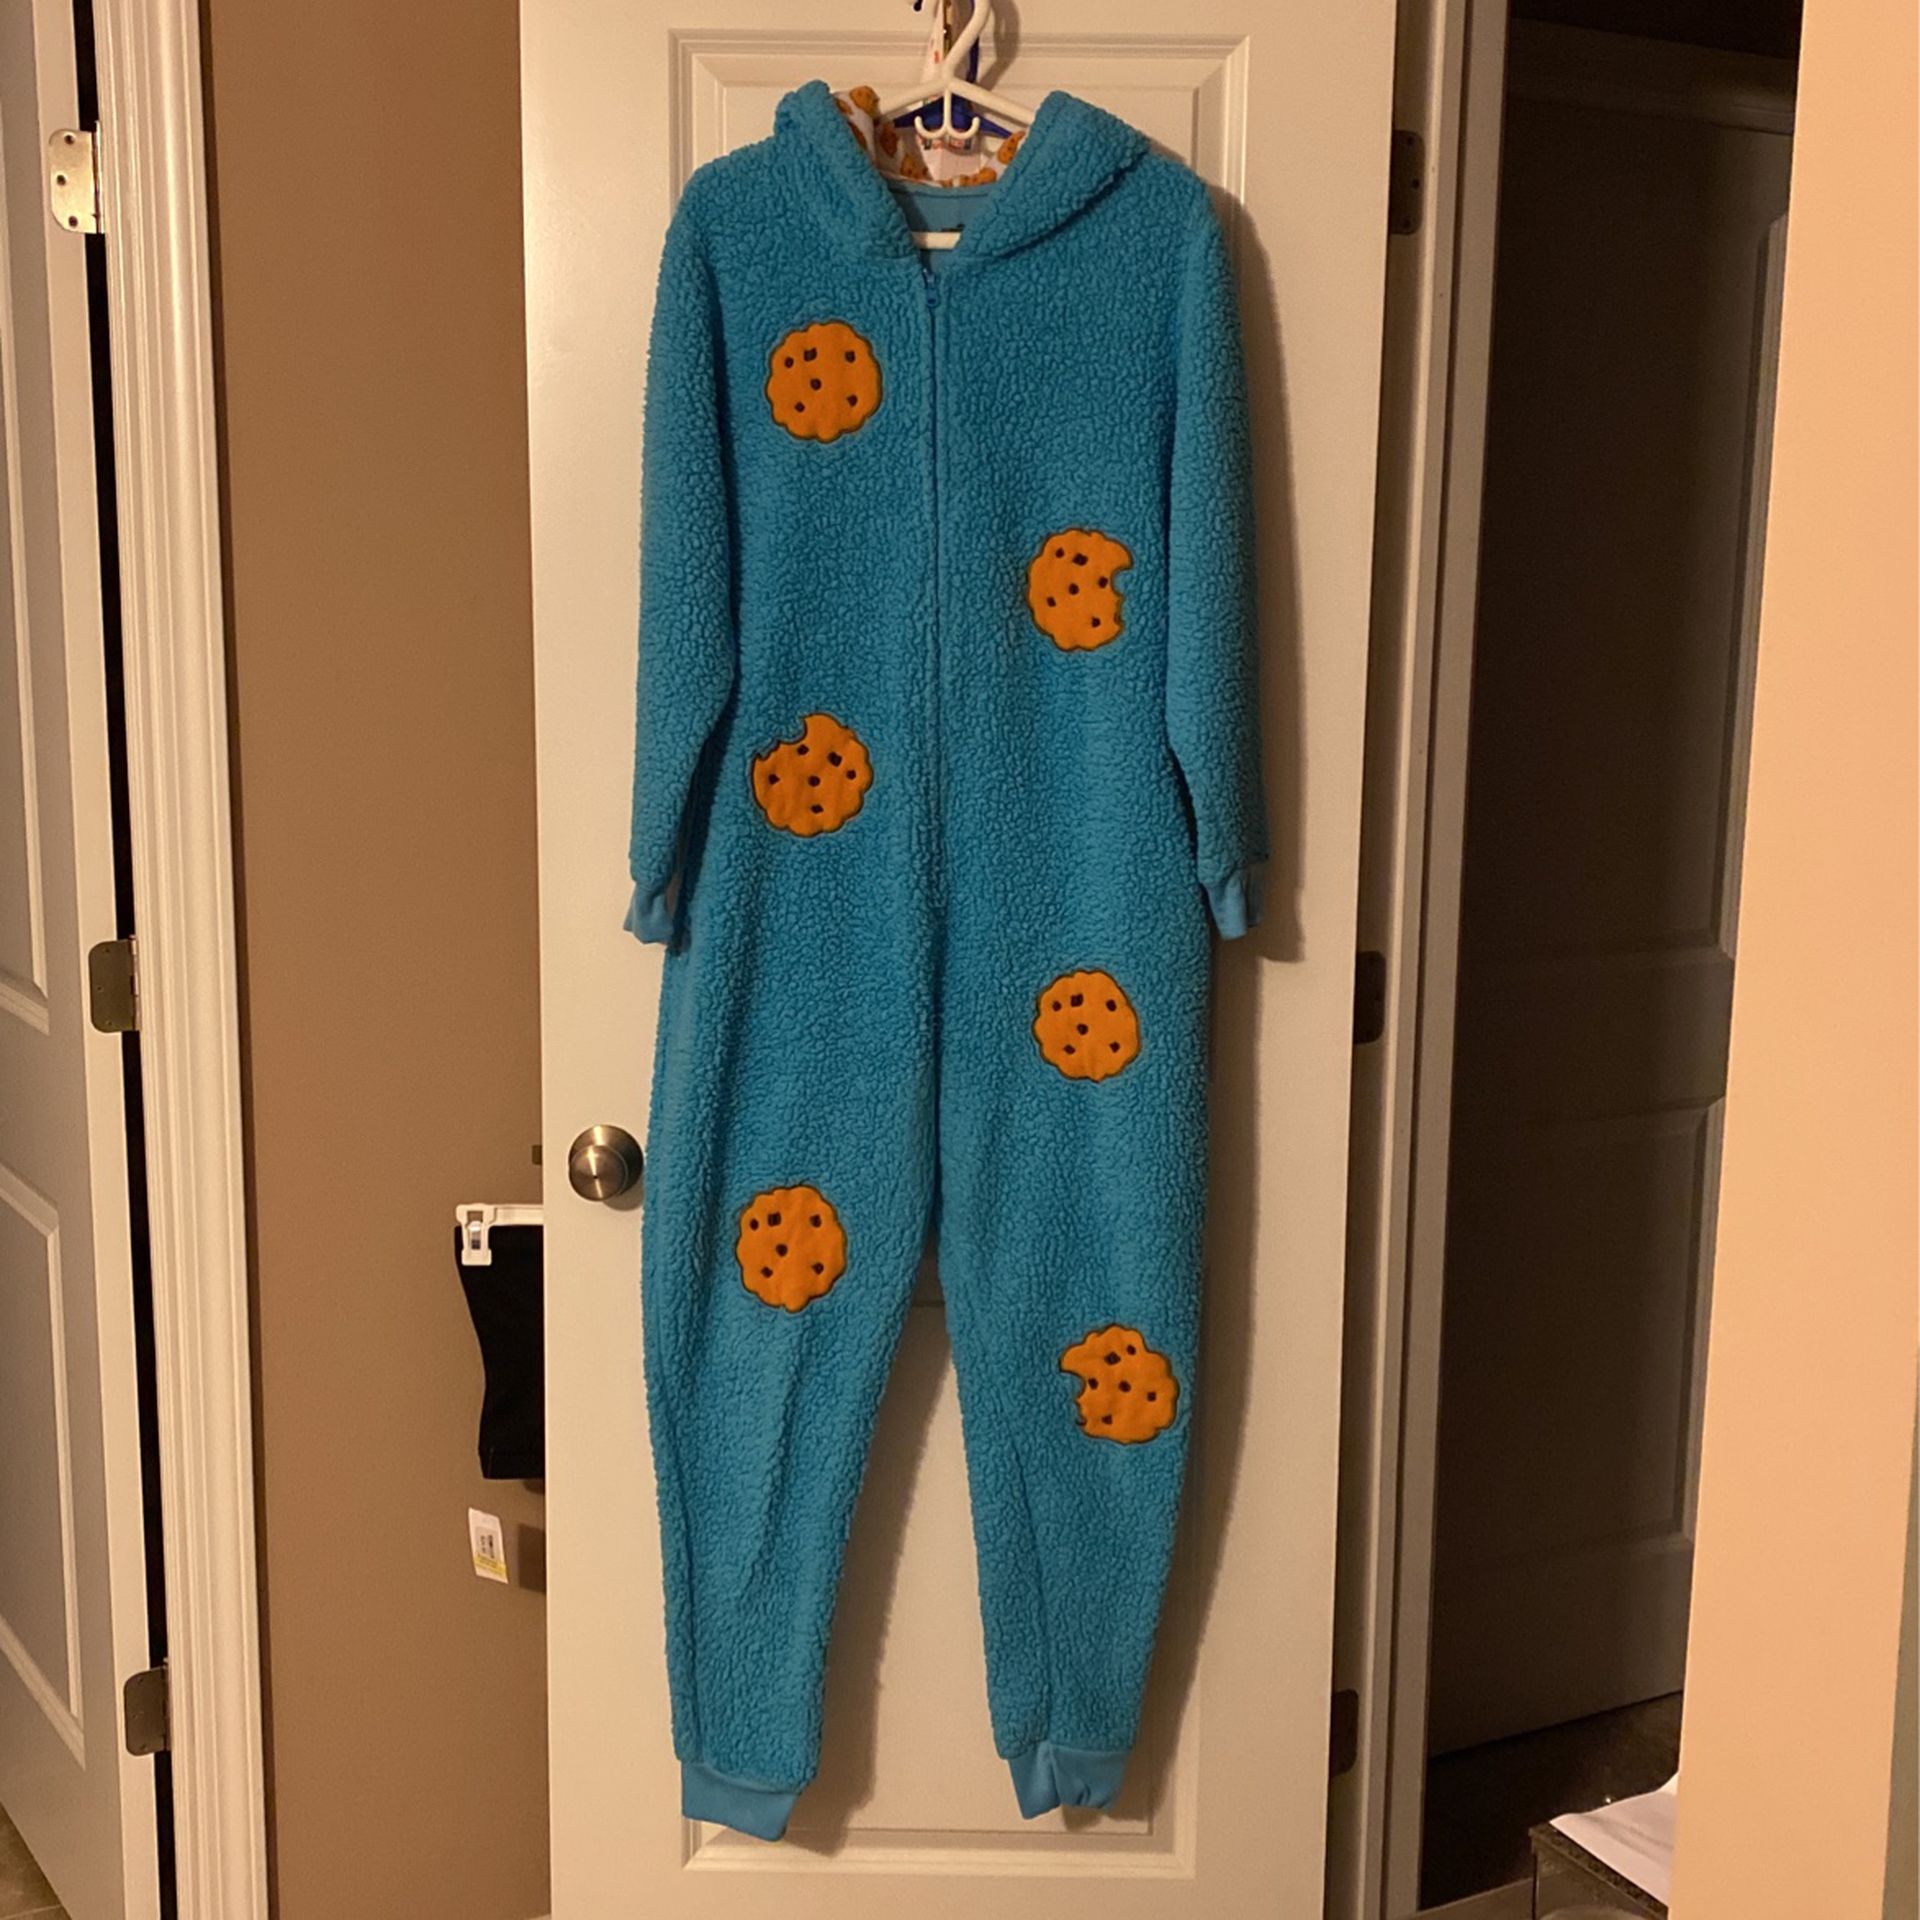 Sesame Street Adult Onsie/Halloween Costume - L/XL